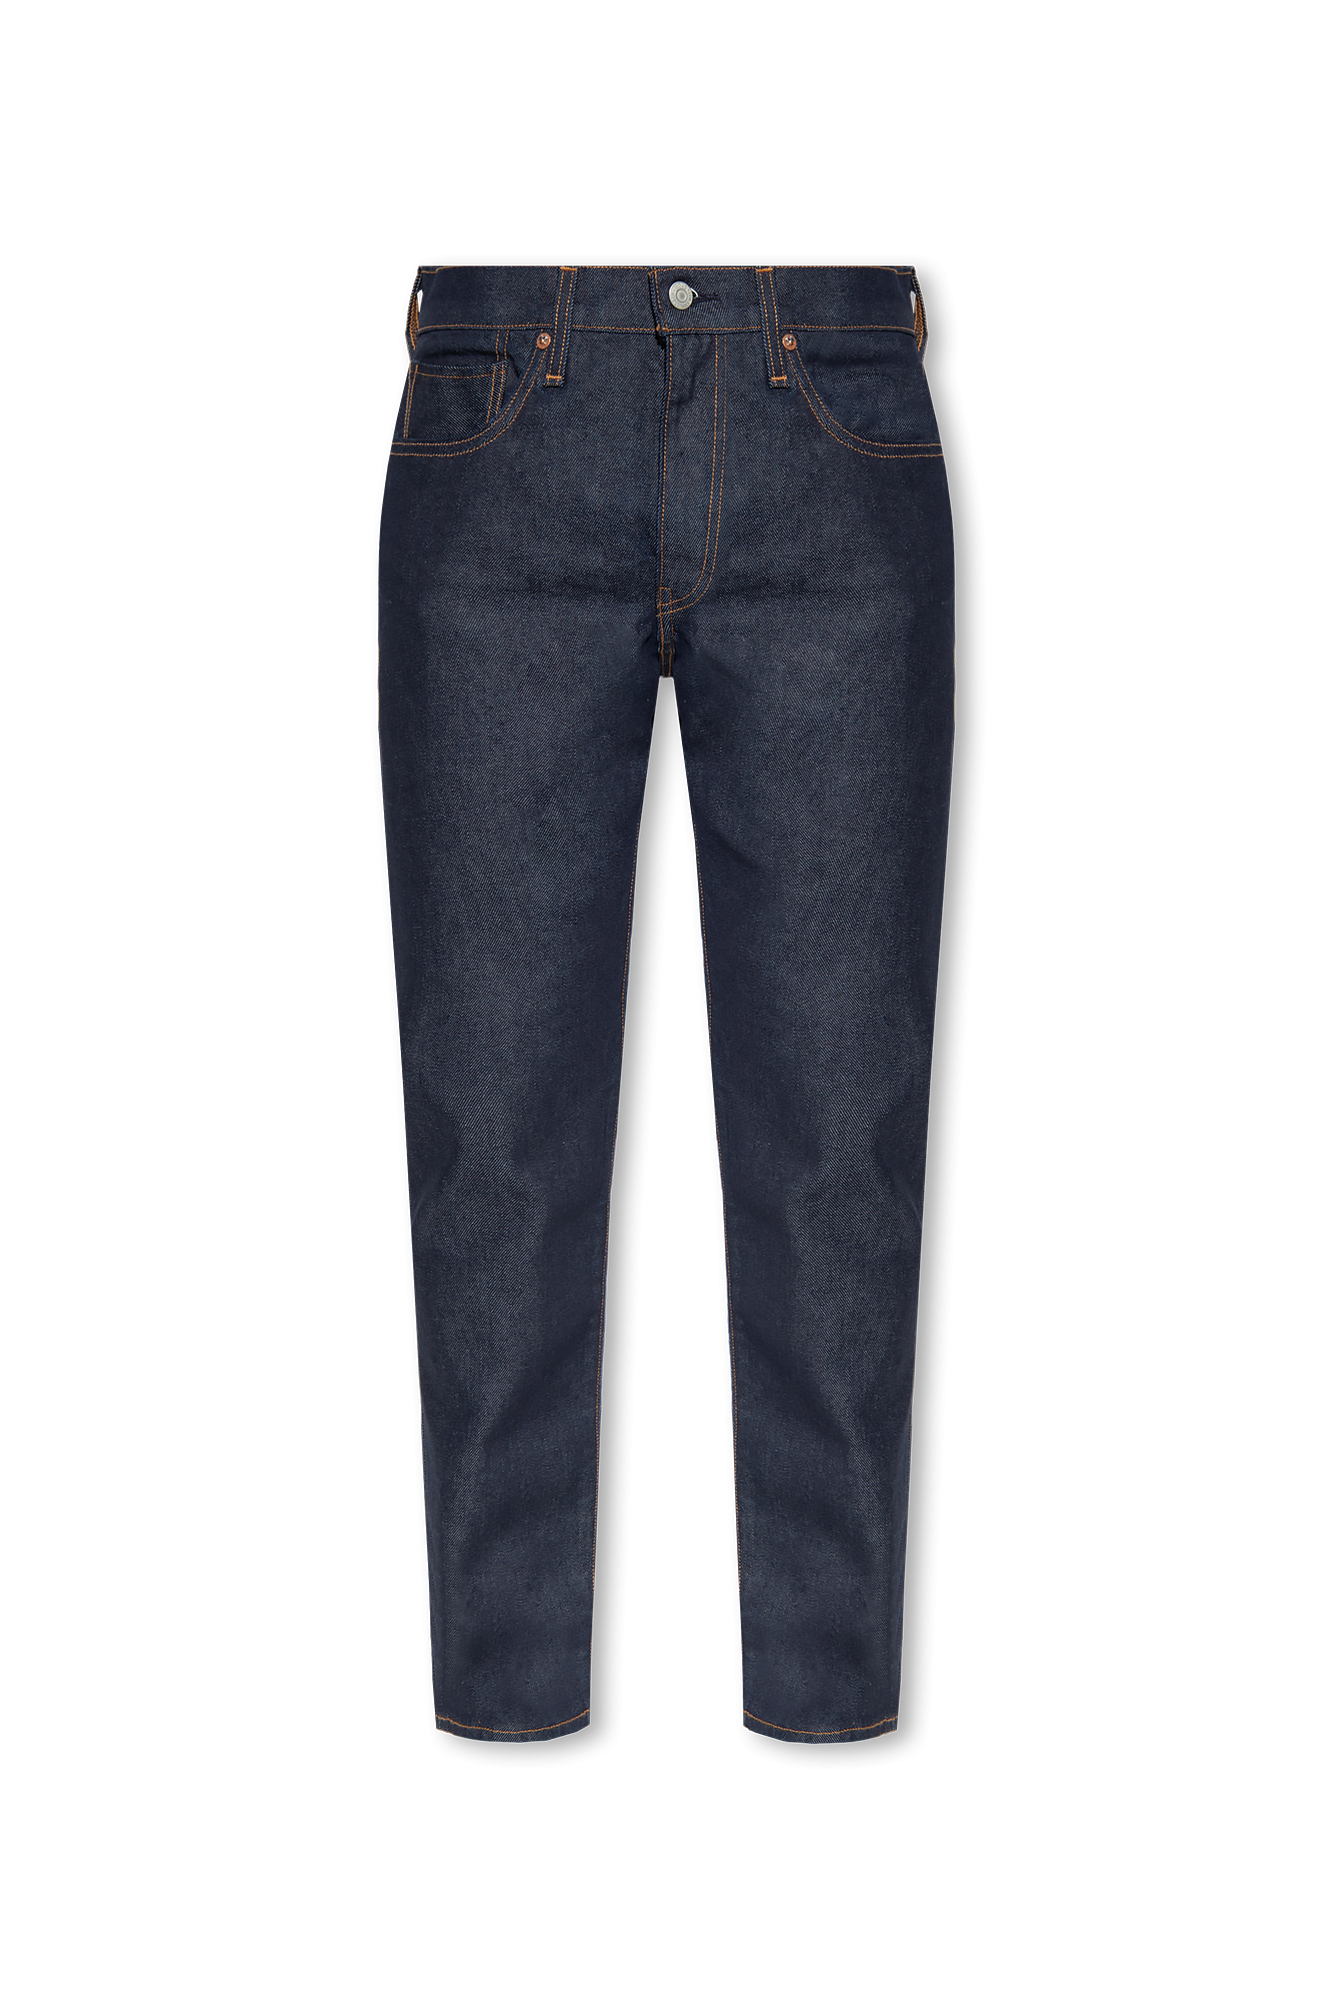 Navy blue ‘512™ Slim Taper’ jeans Levi's - Vitkac Germany